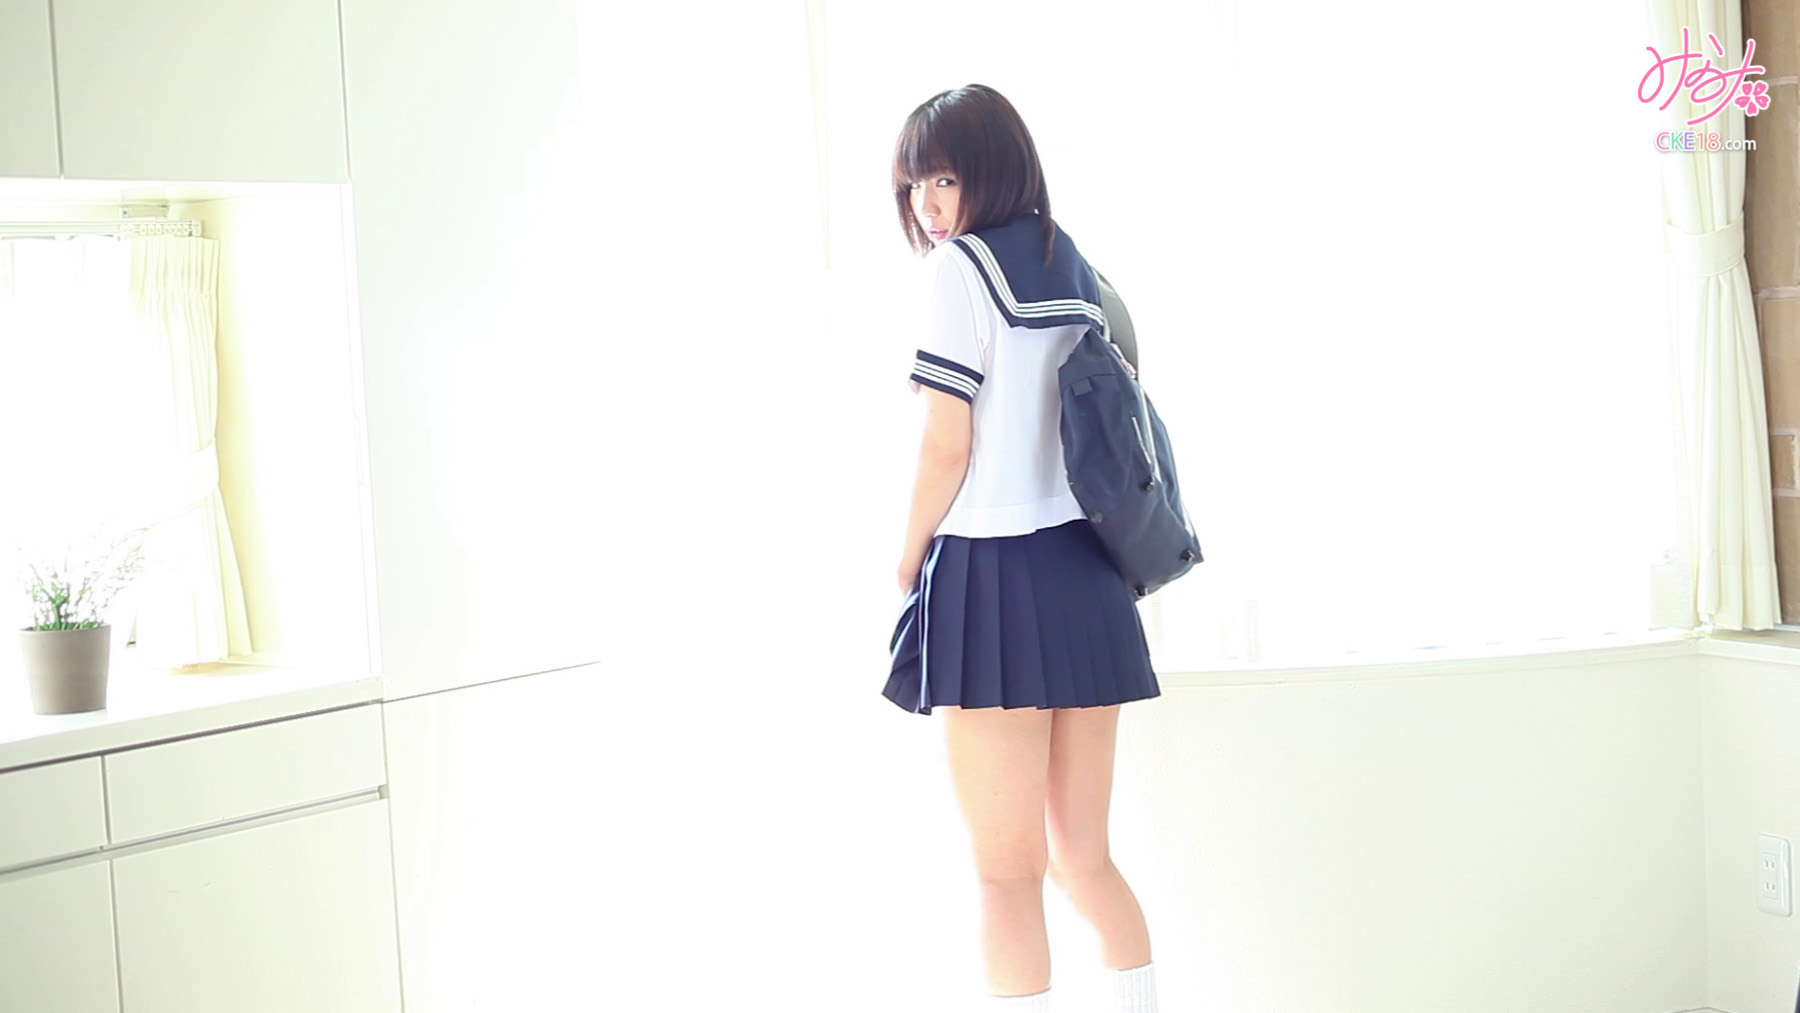 Sweet innocent schoolgirl minami fan photo